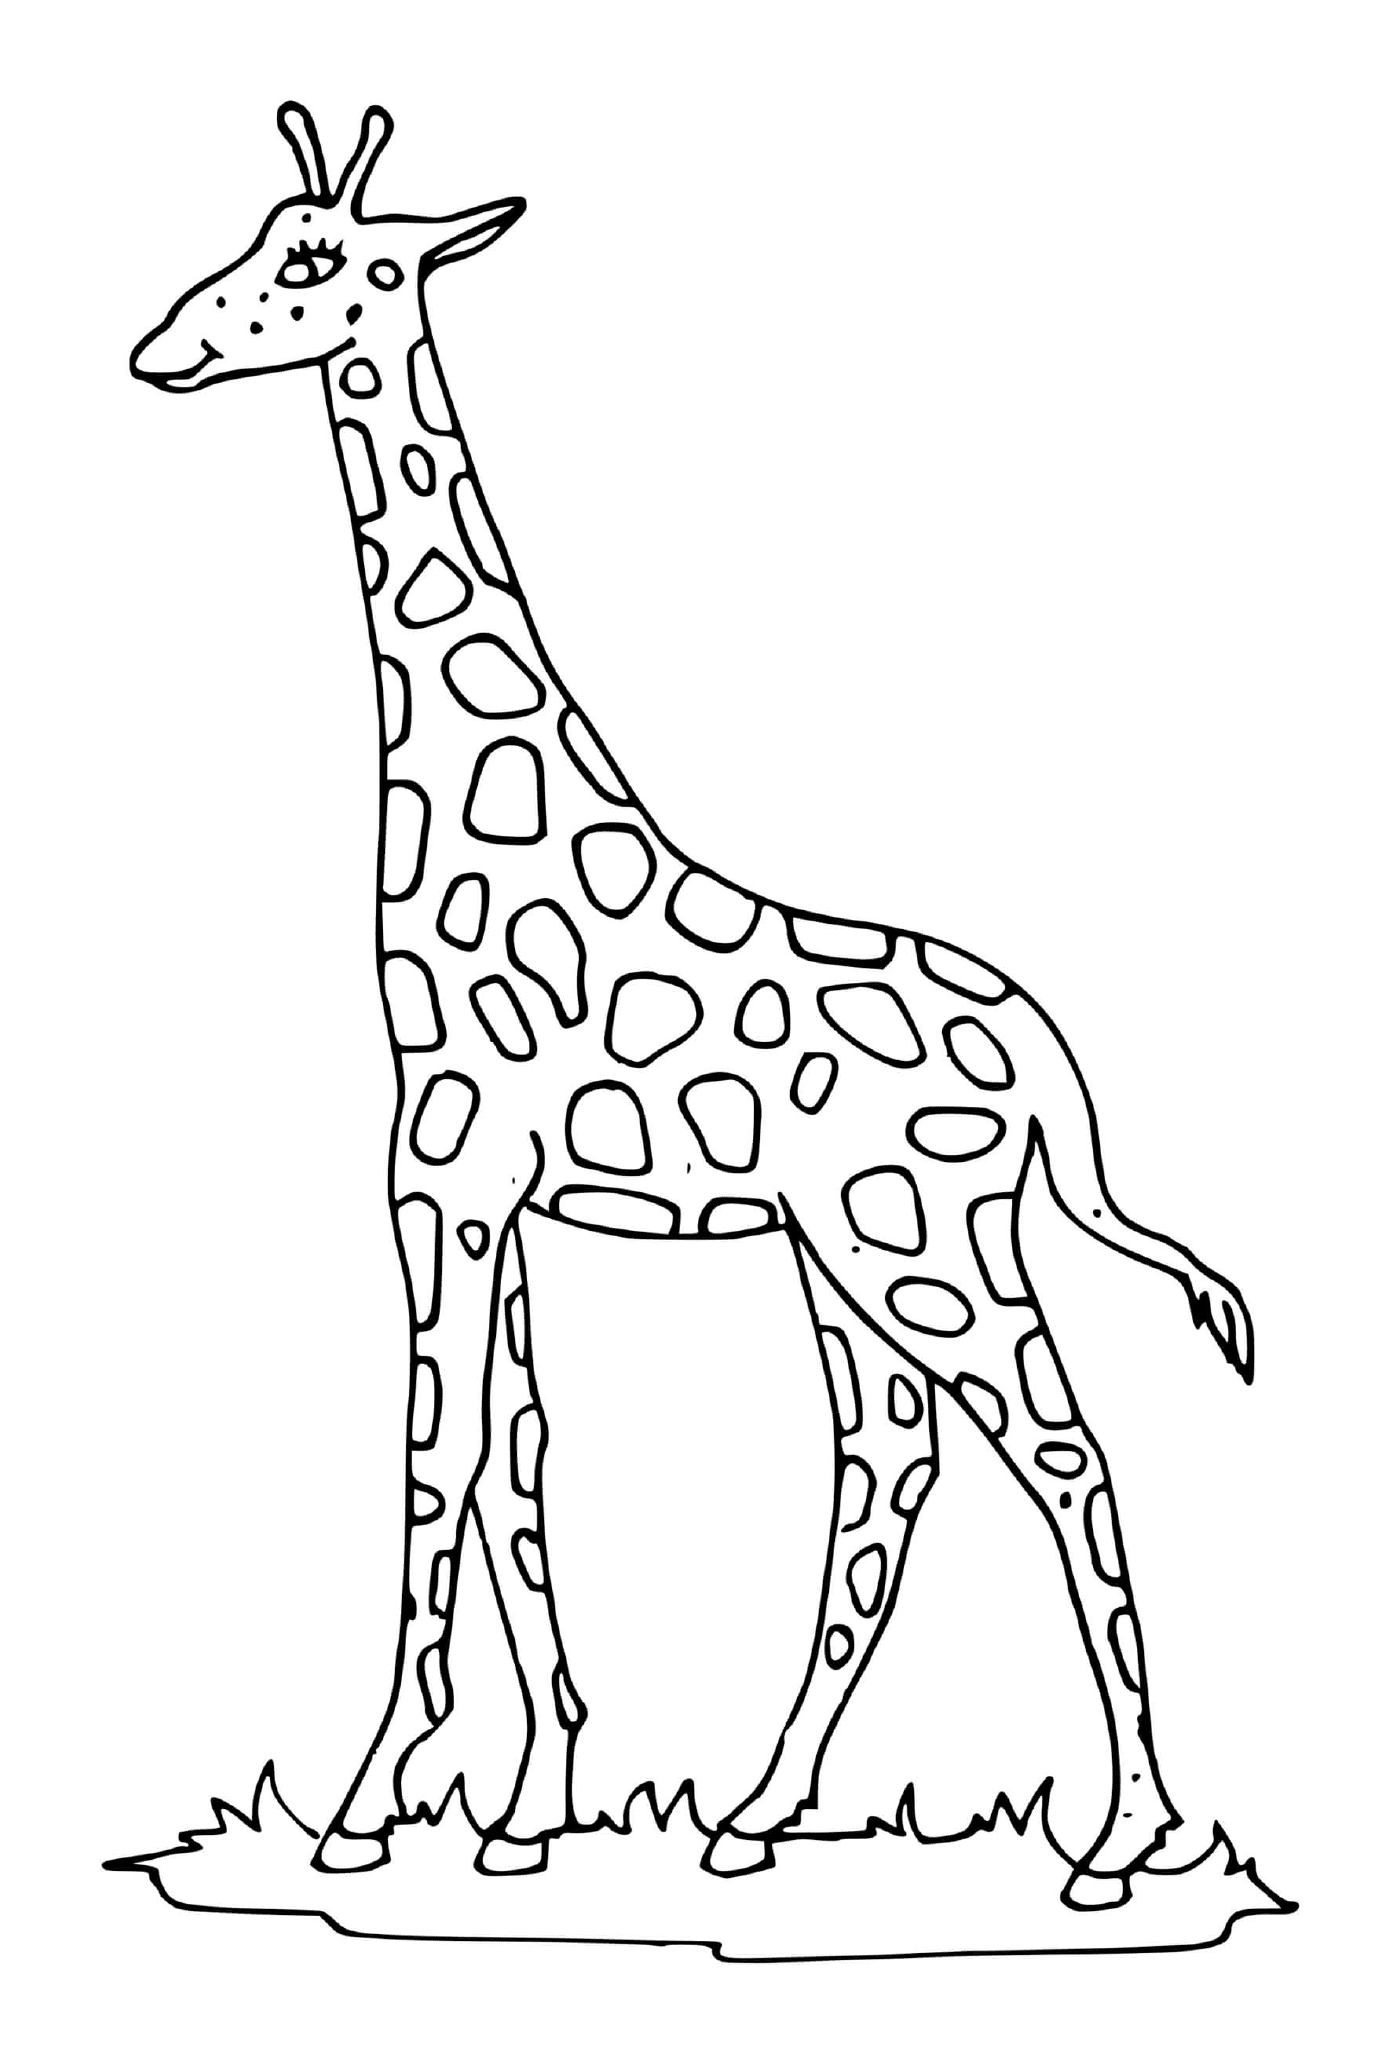  Girafe with a long neck 